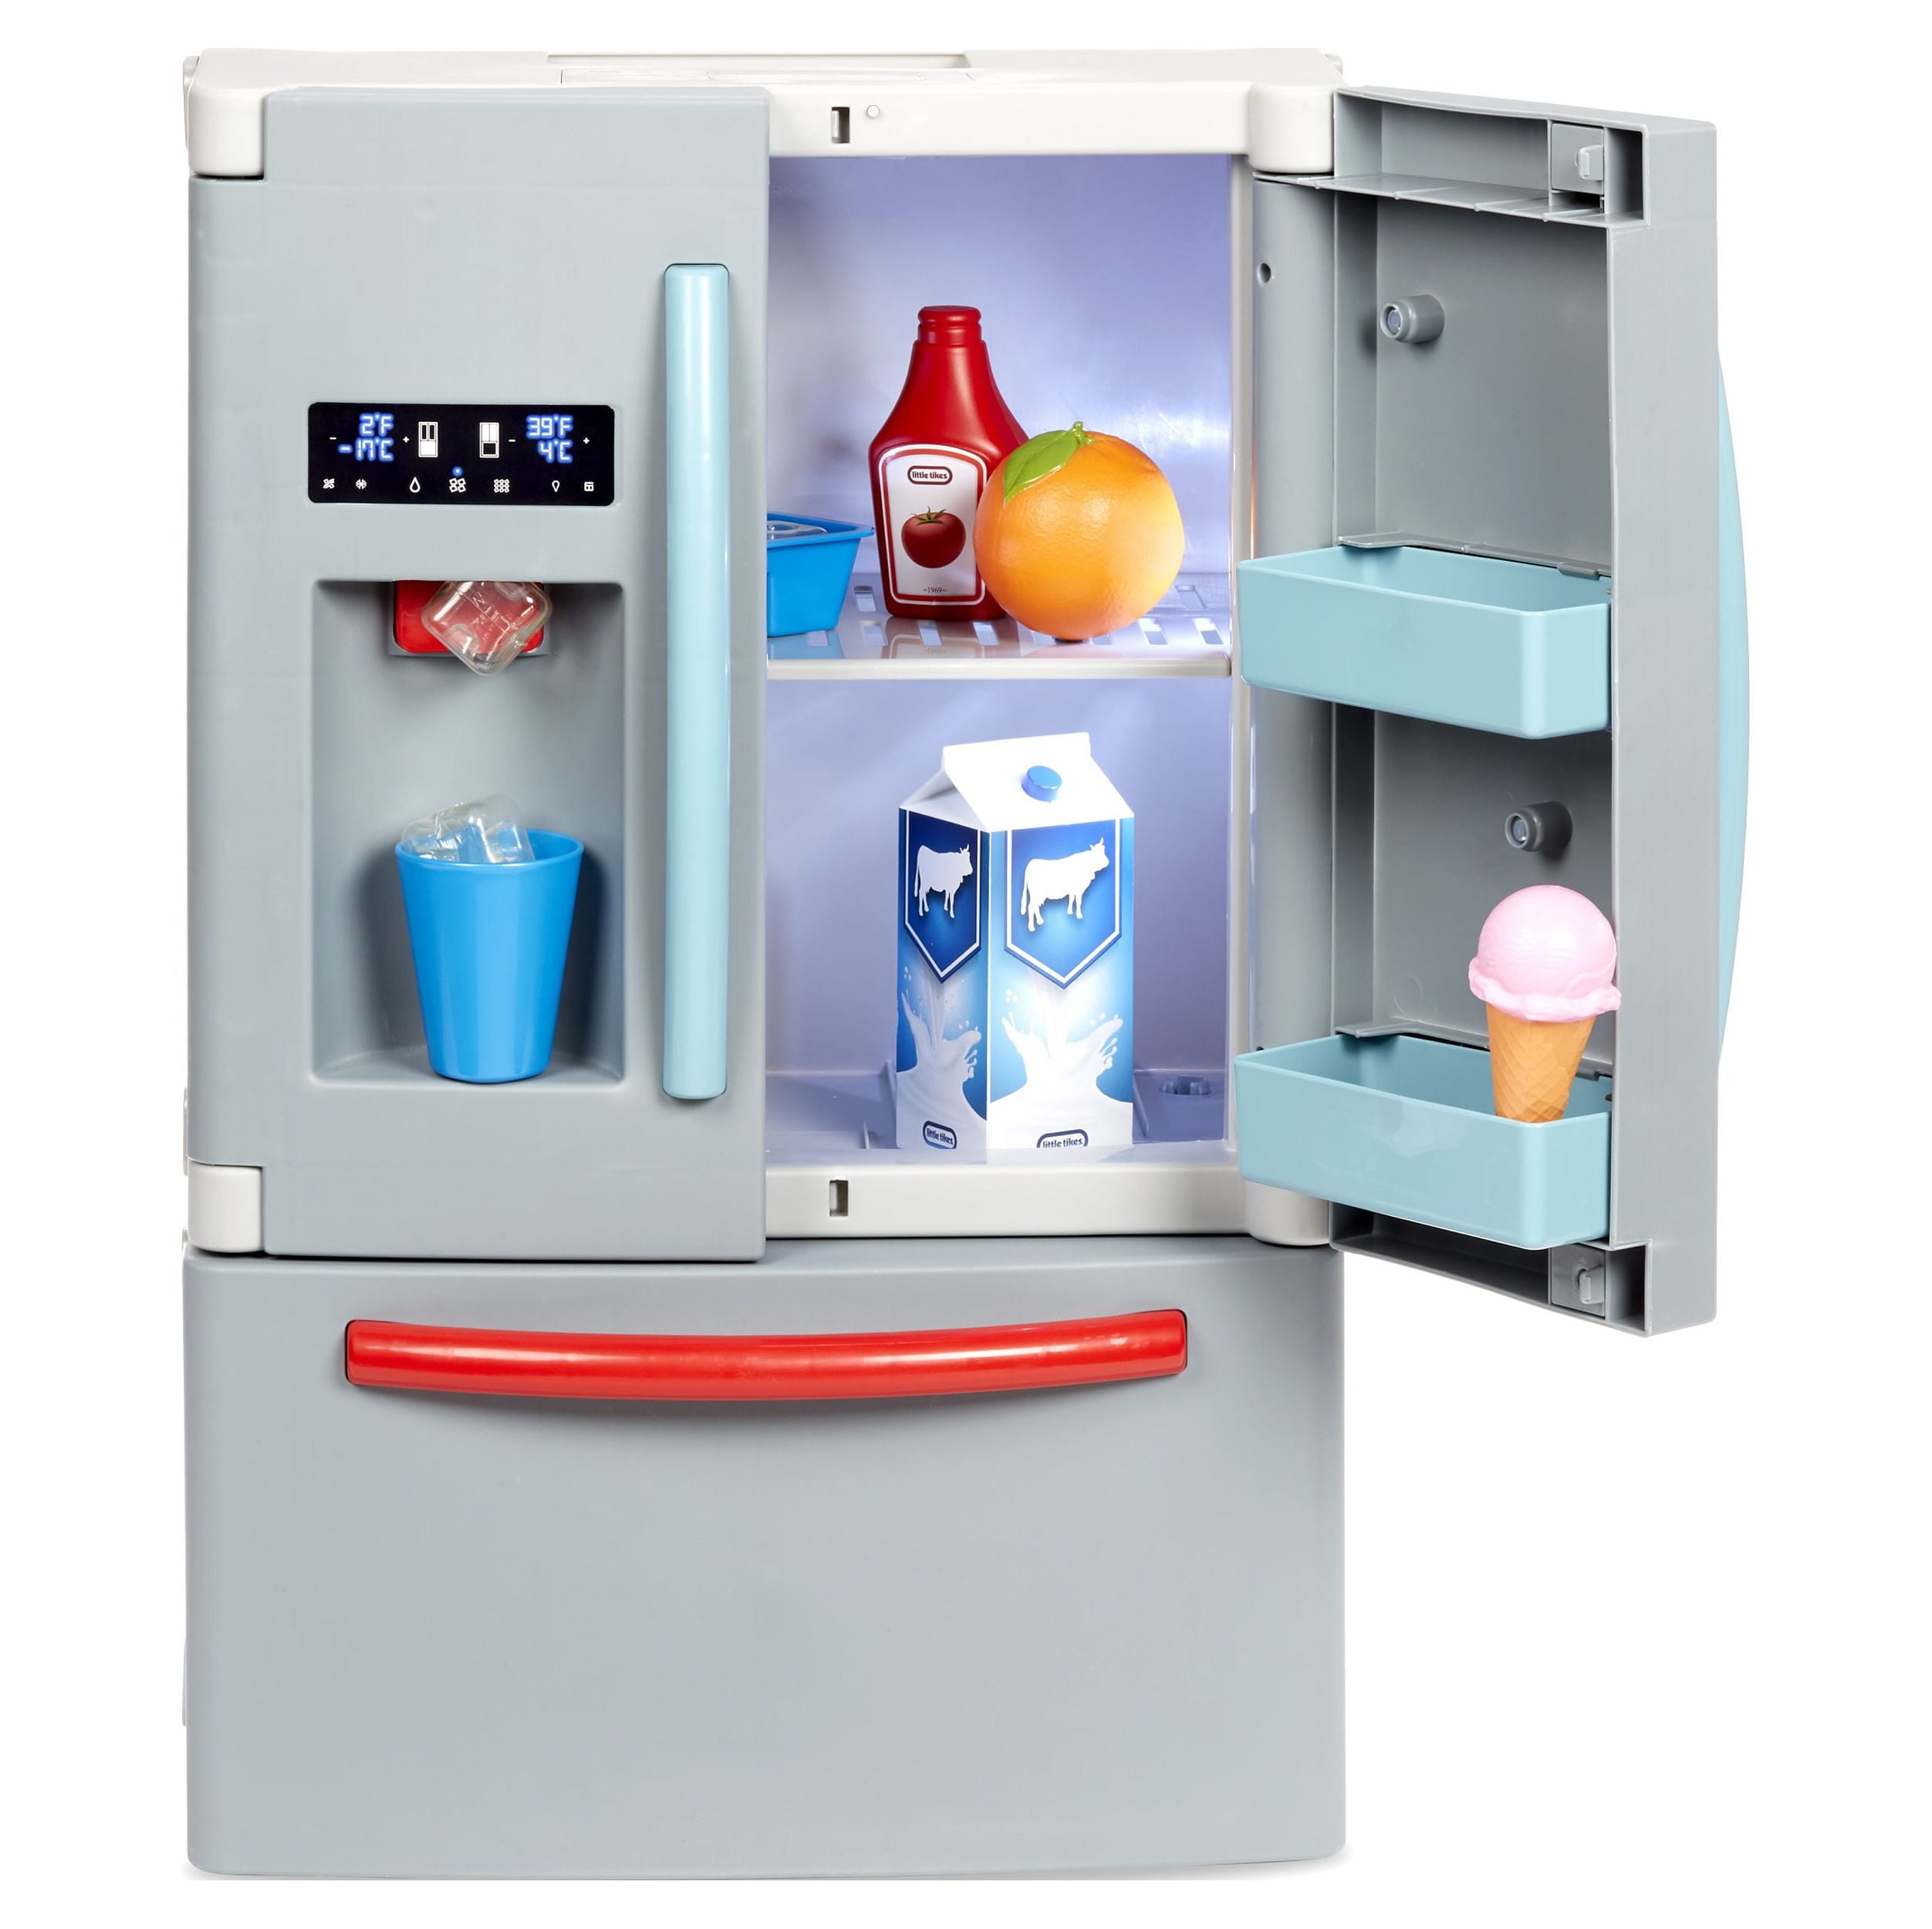 Mini Refrigerator & Food Toy Set 16-Pieces